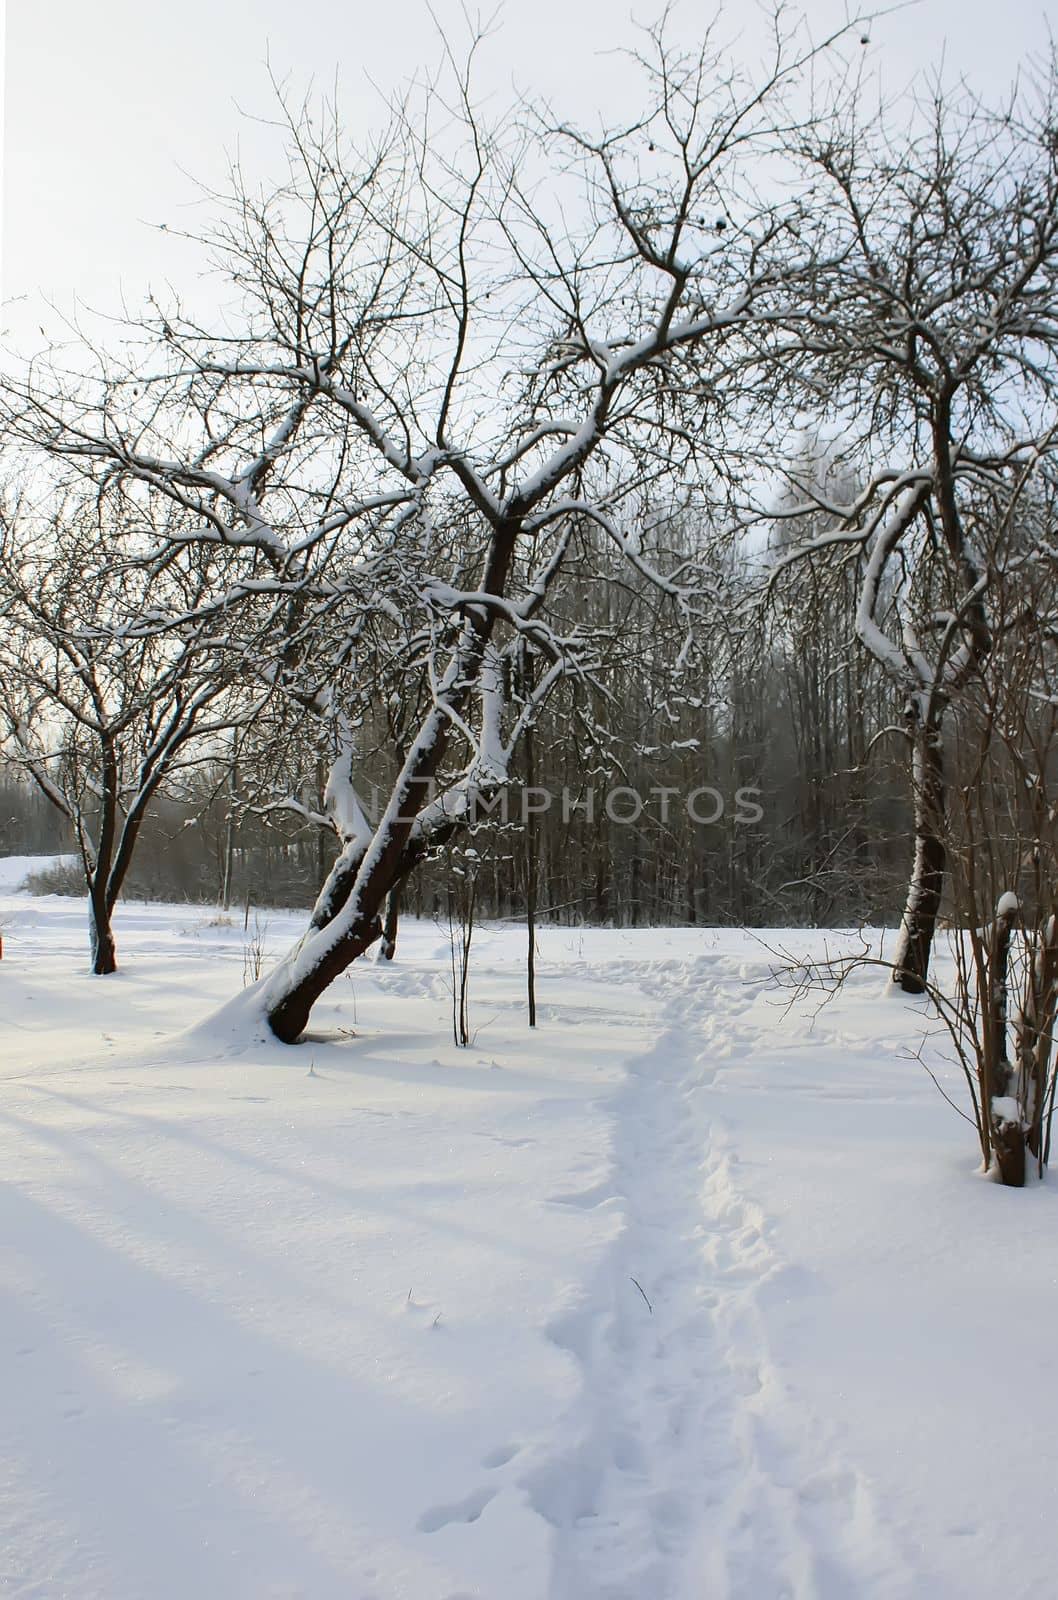 Seasonal nature background. Winter nature details